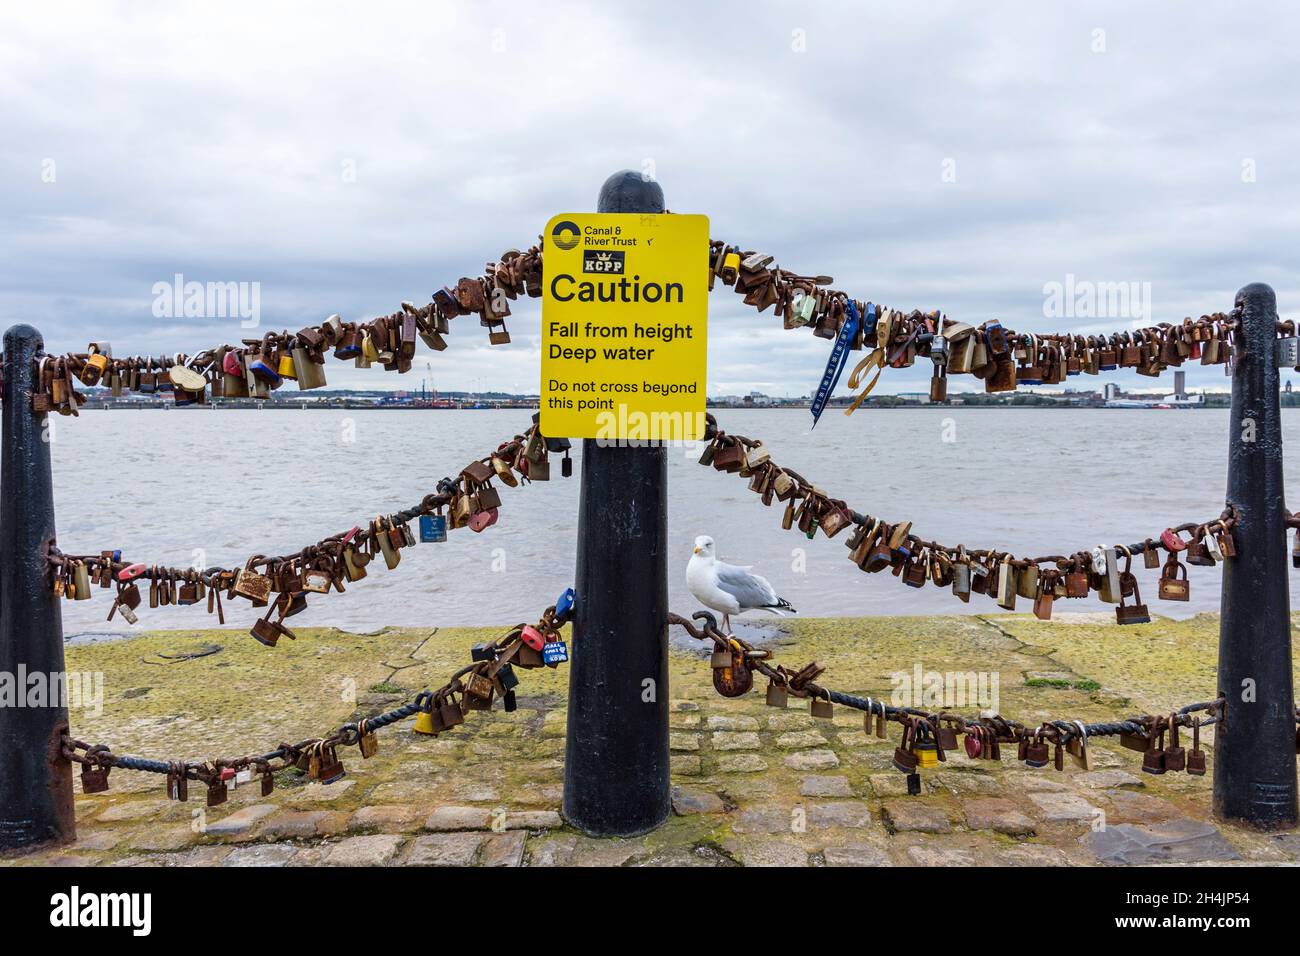 Lovelocks on railings by River Mersey, Liverpool docks, UK. Stock Photo